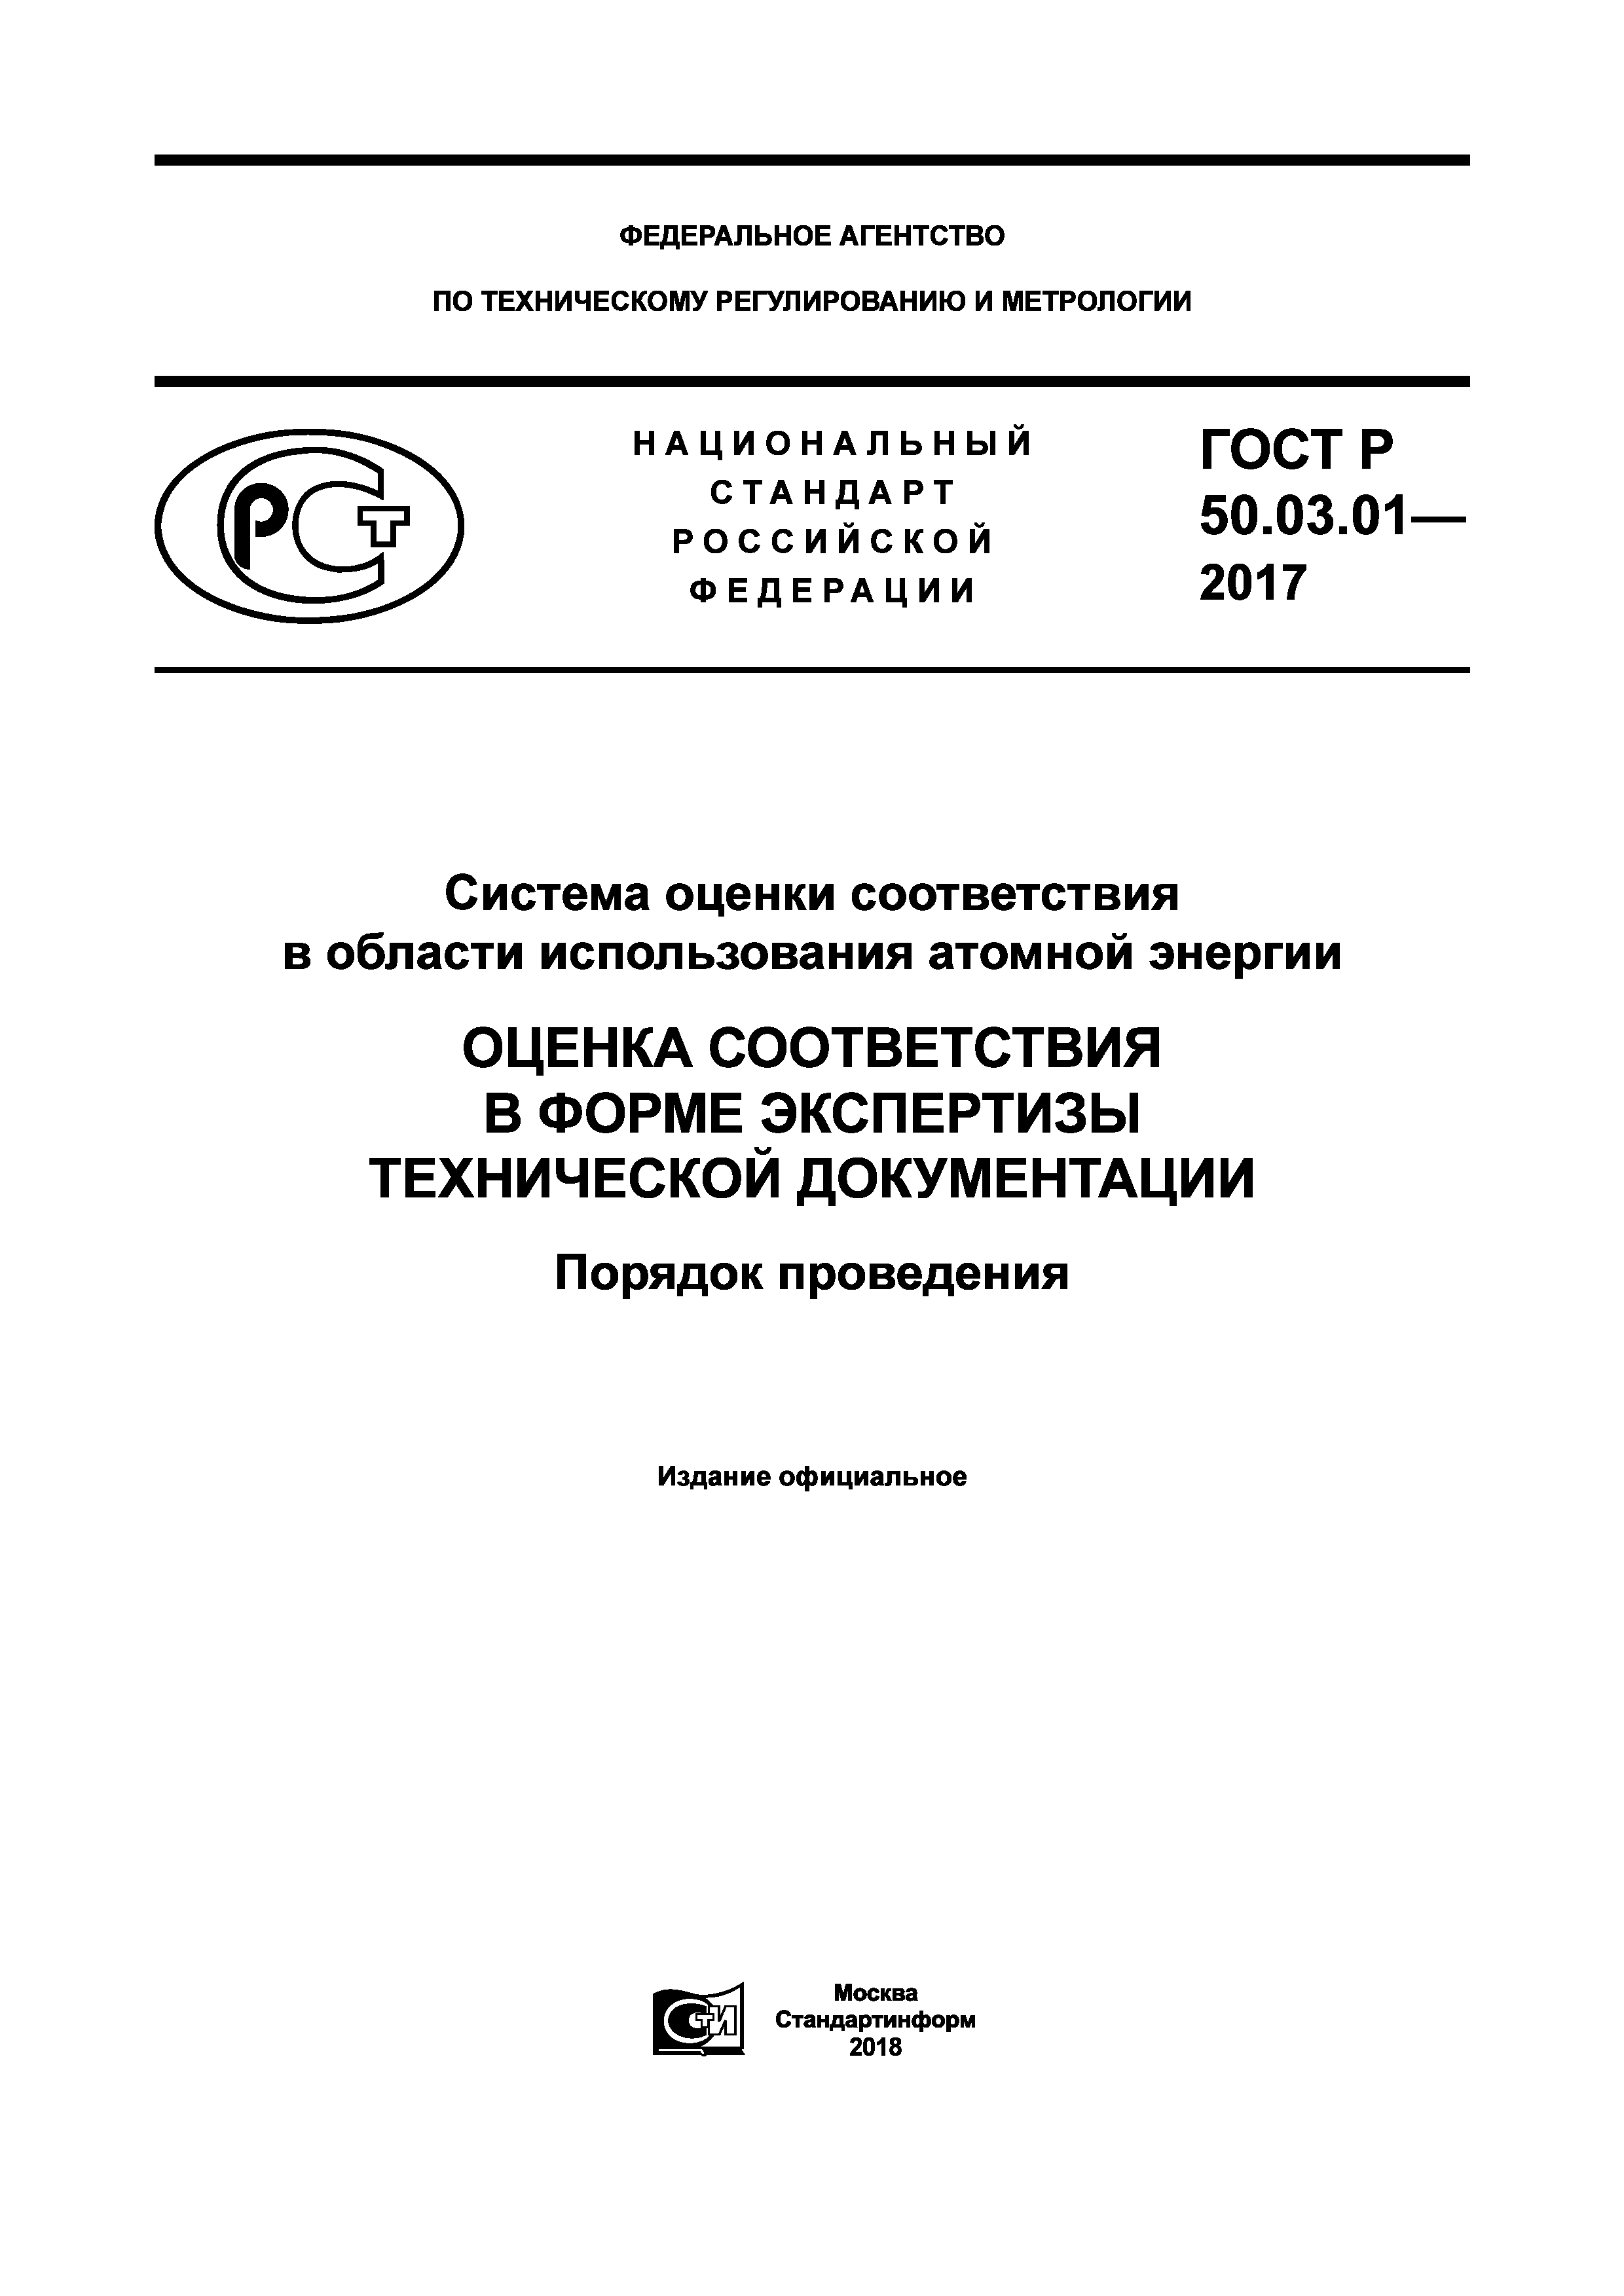 ГОСТ Р 50.03.01-2017